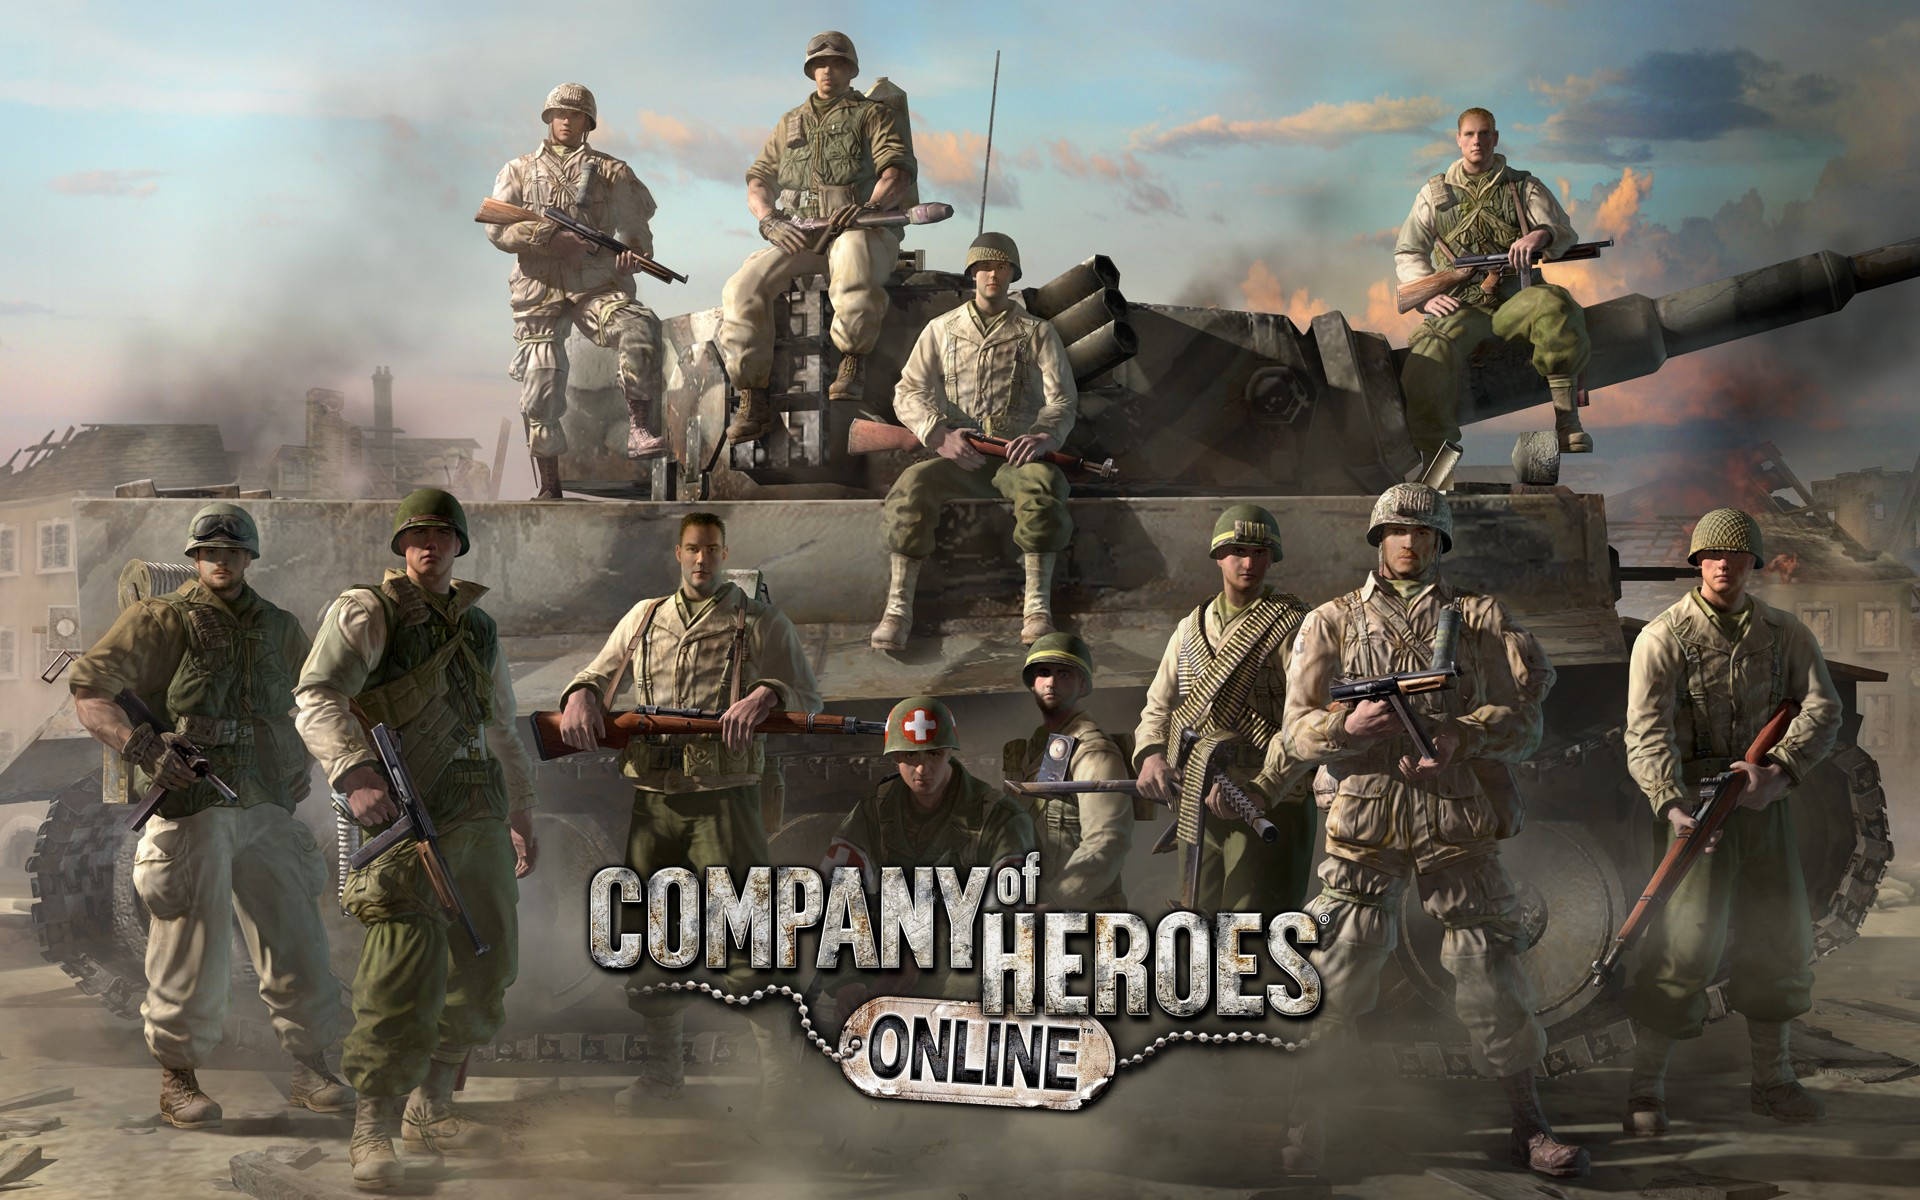 Companyof Heroes Online Wallpaper